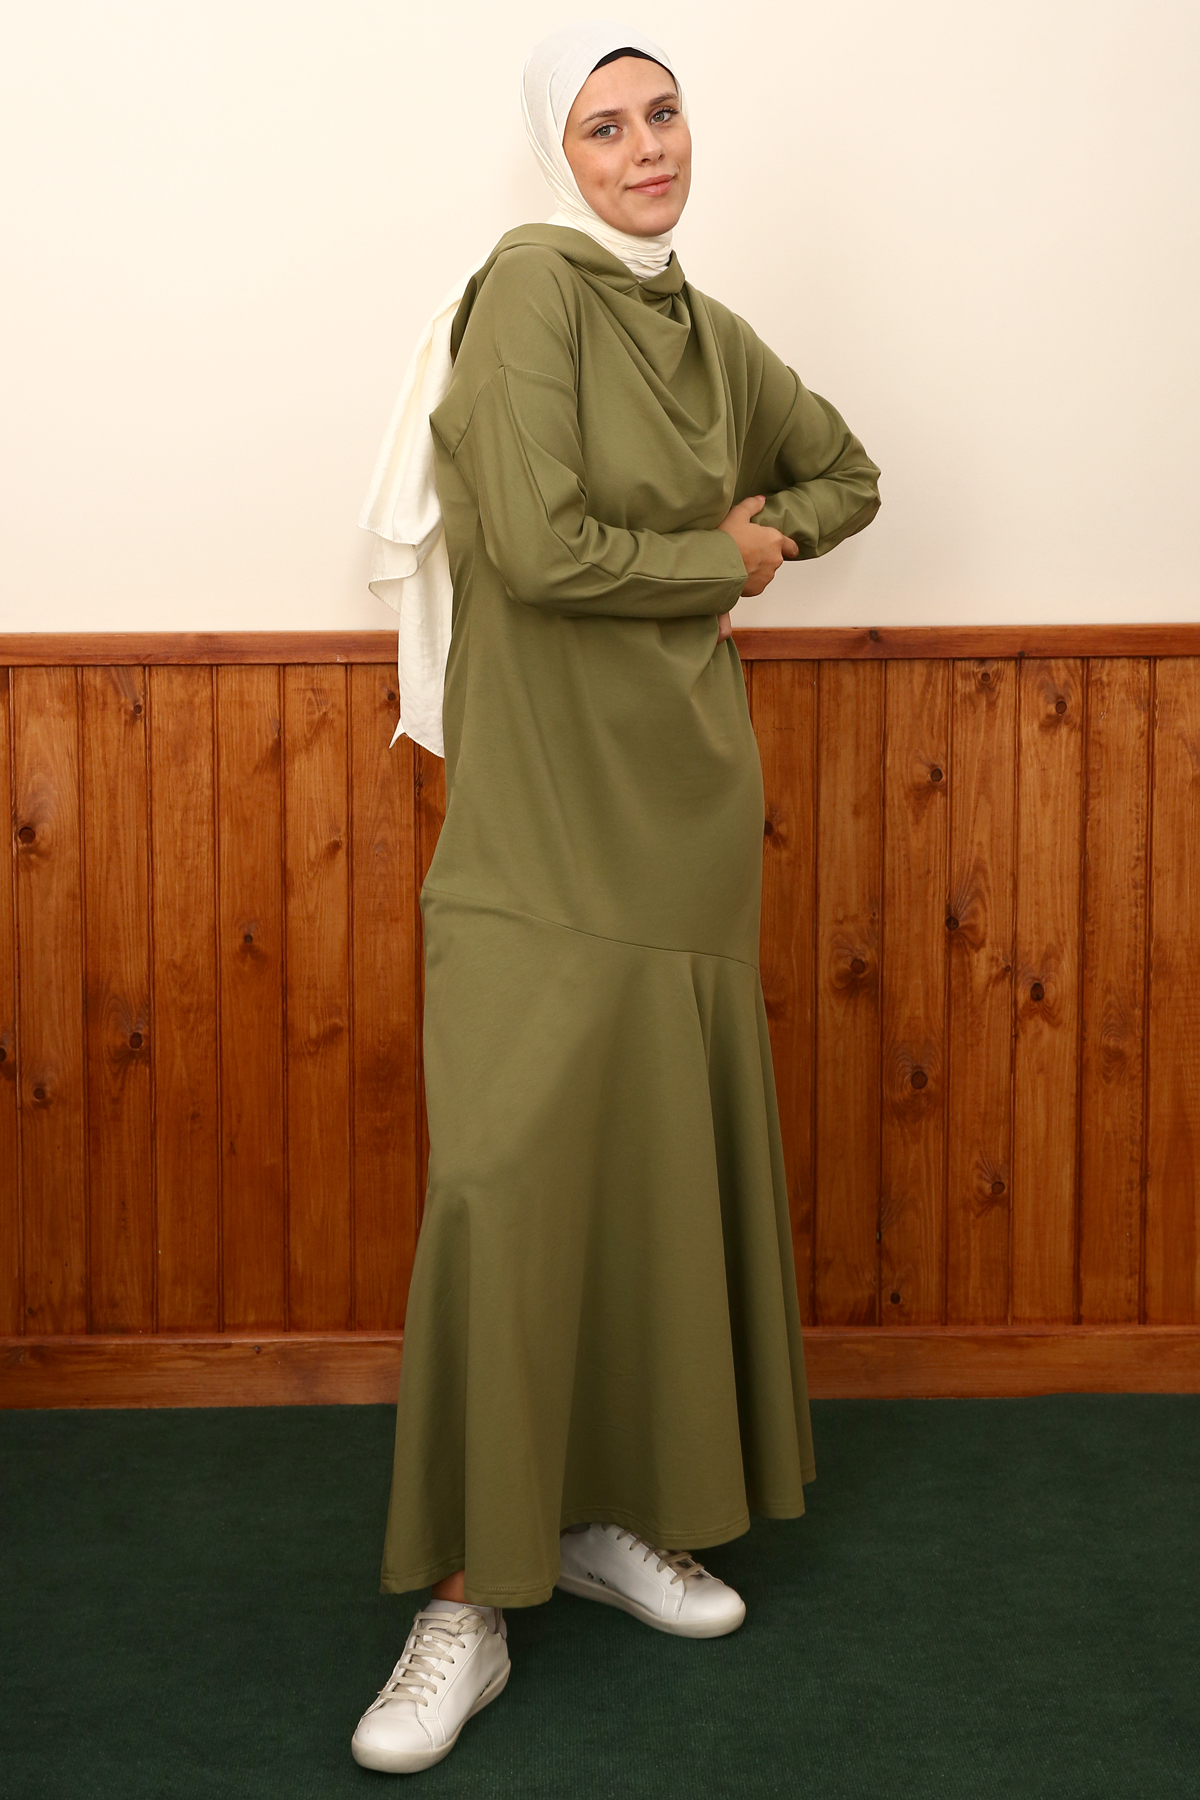 Cowl Neck Long Sleeve Hooded Dress 